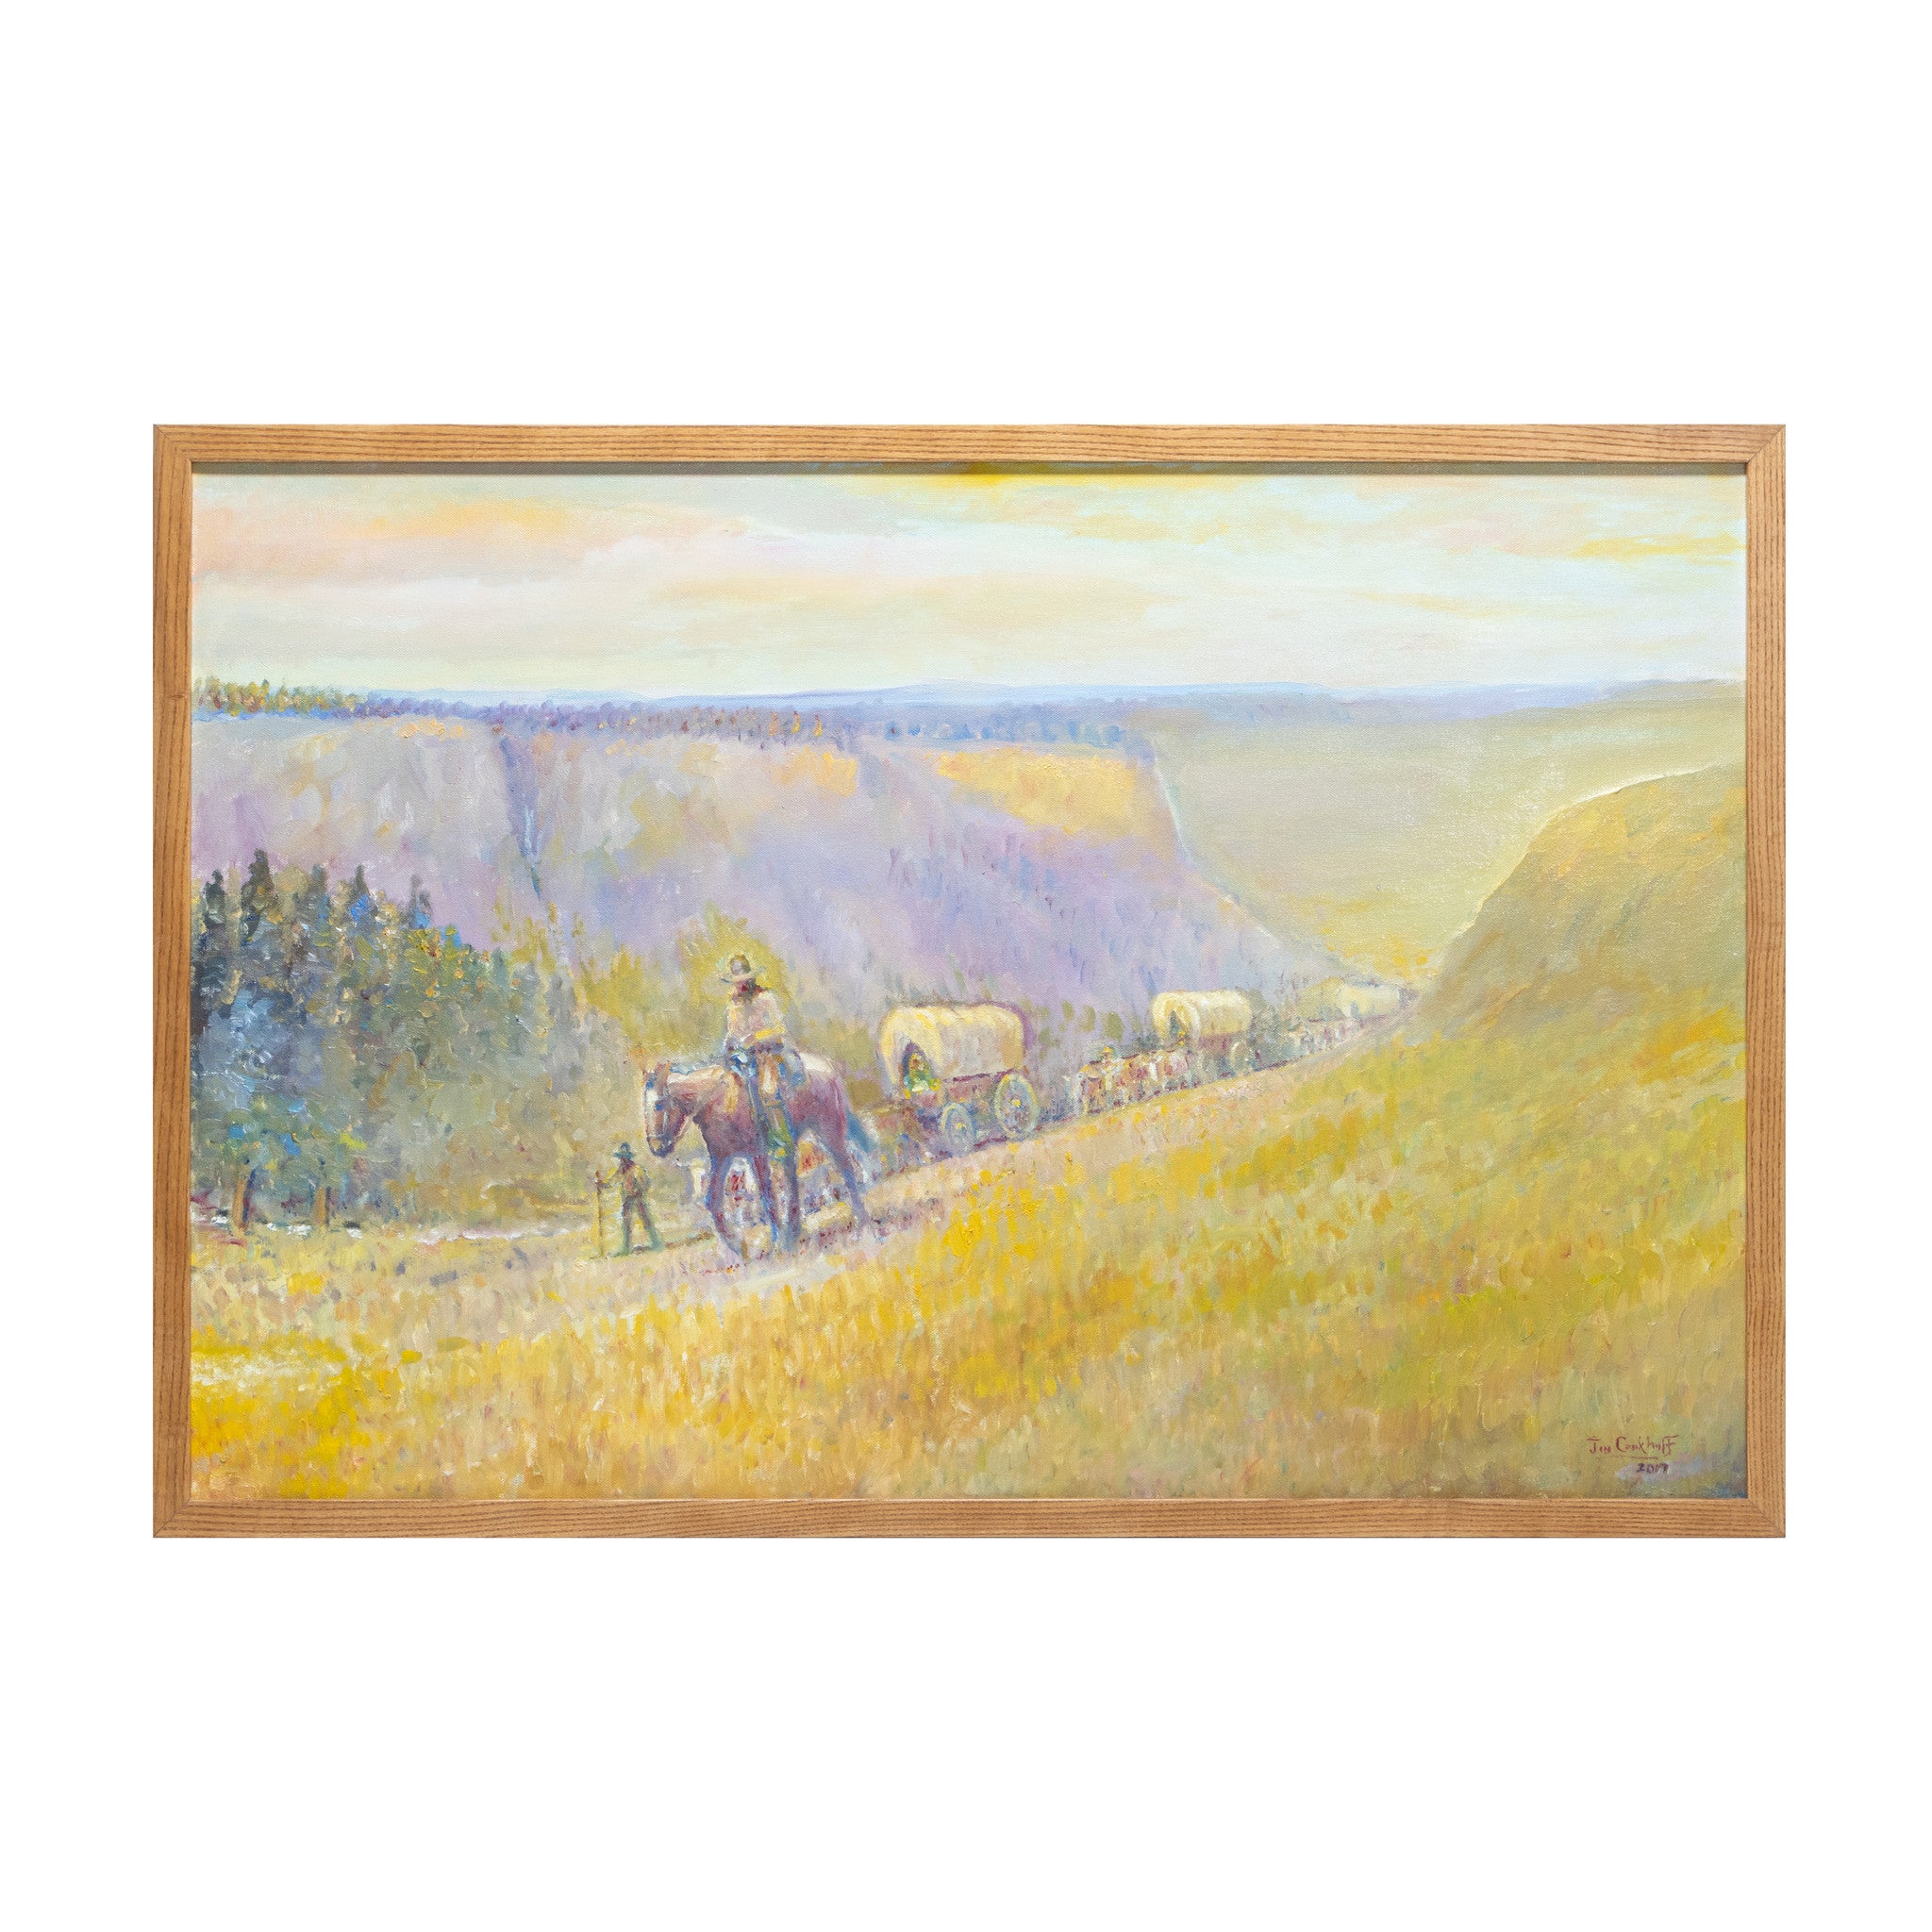 "Wyoming Wagon Train" by Jim Carkhuff